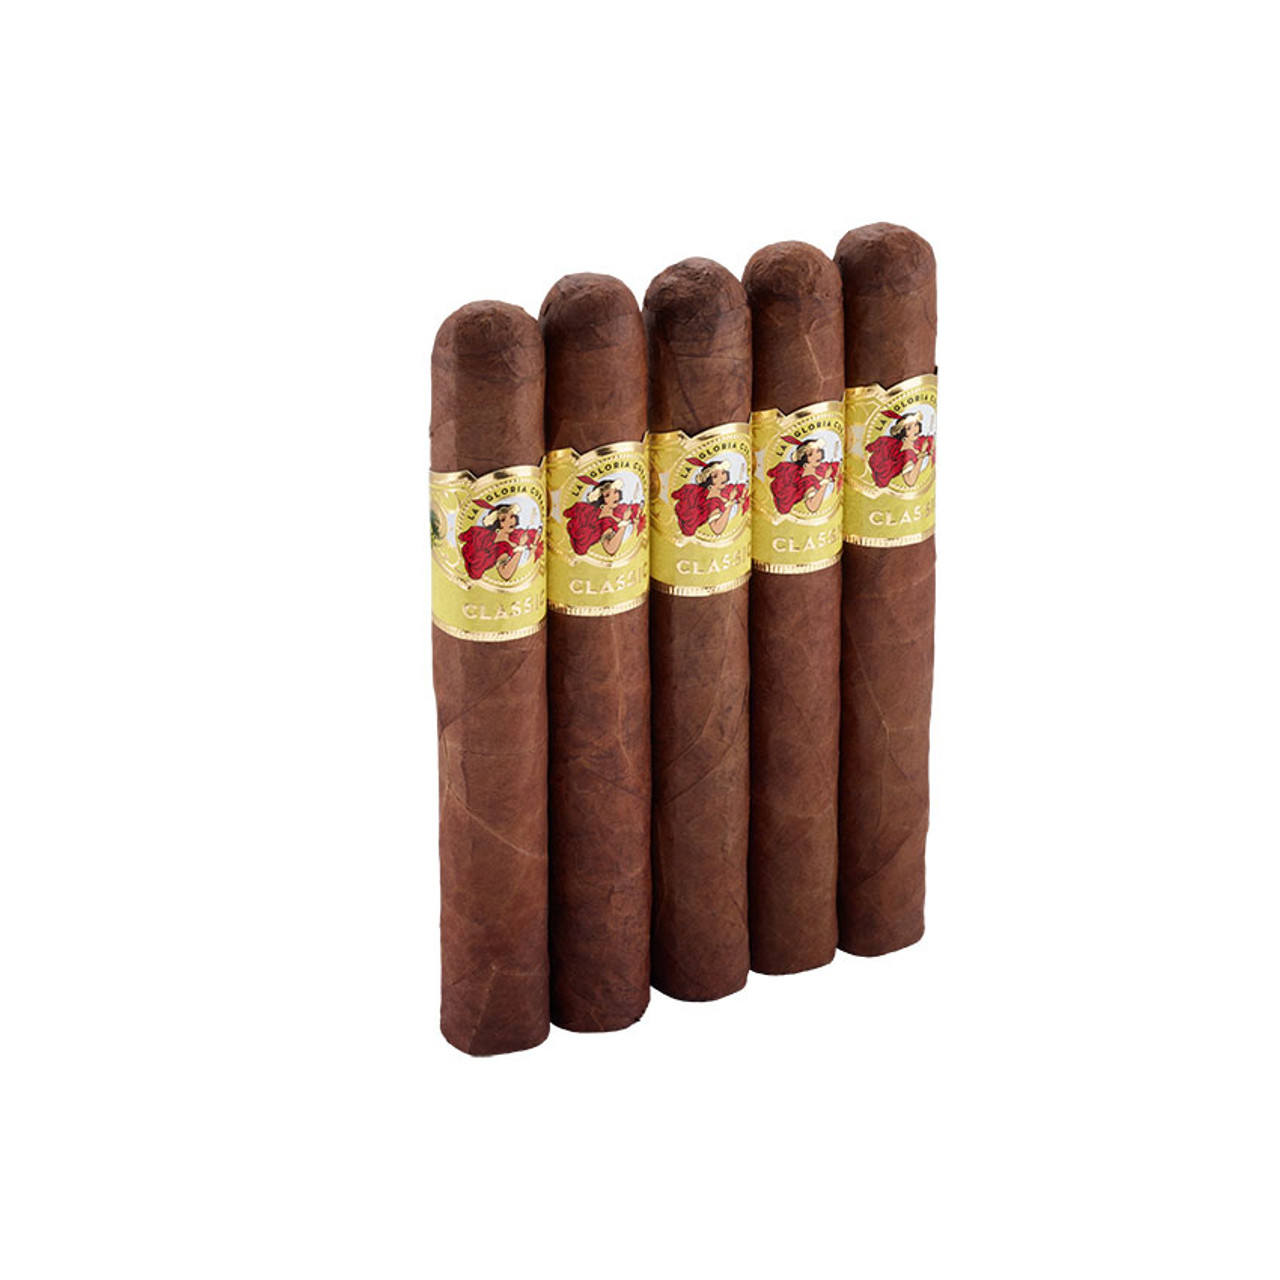 La Gloria Cubana Corona Gorda Cigars - 6 x 52 (Pack of 5) *Box